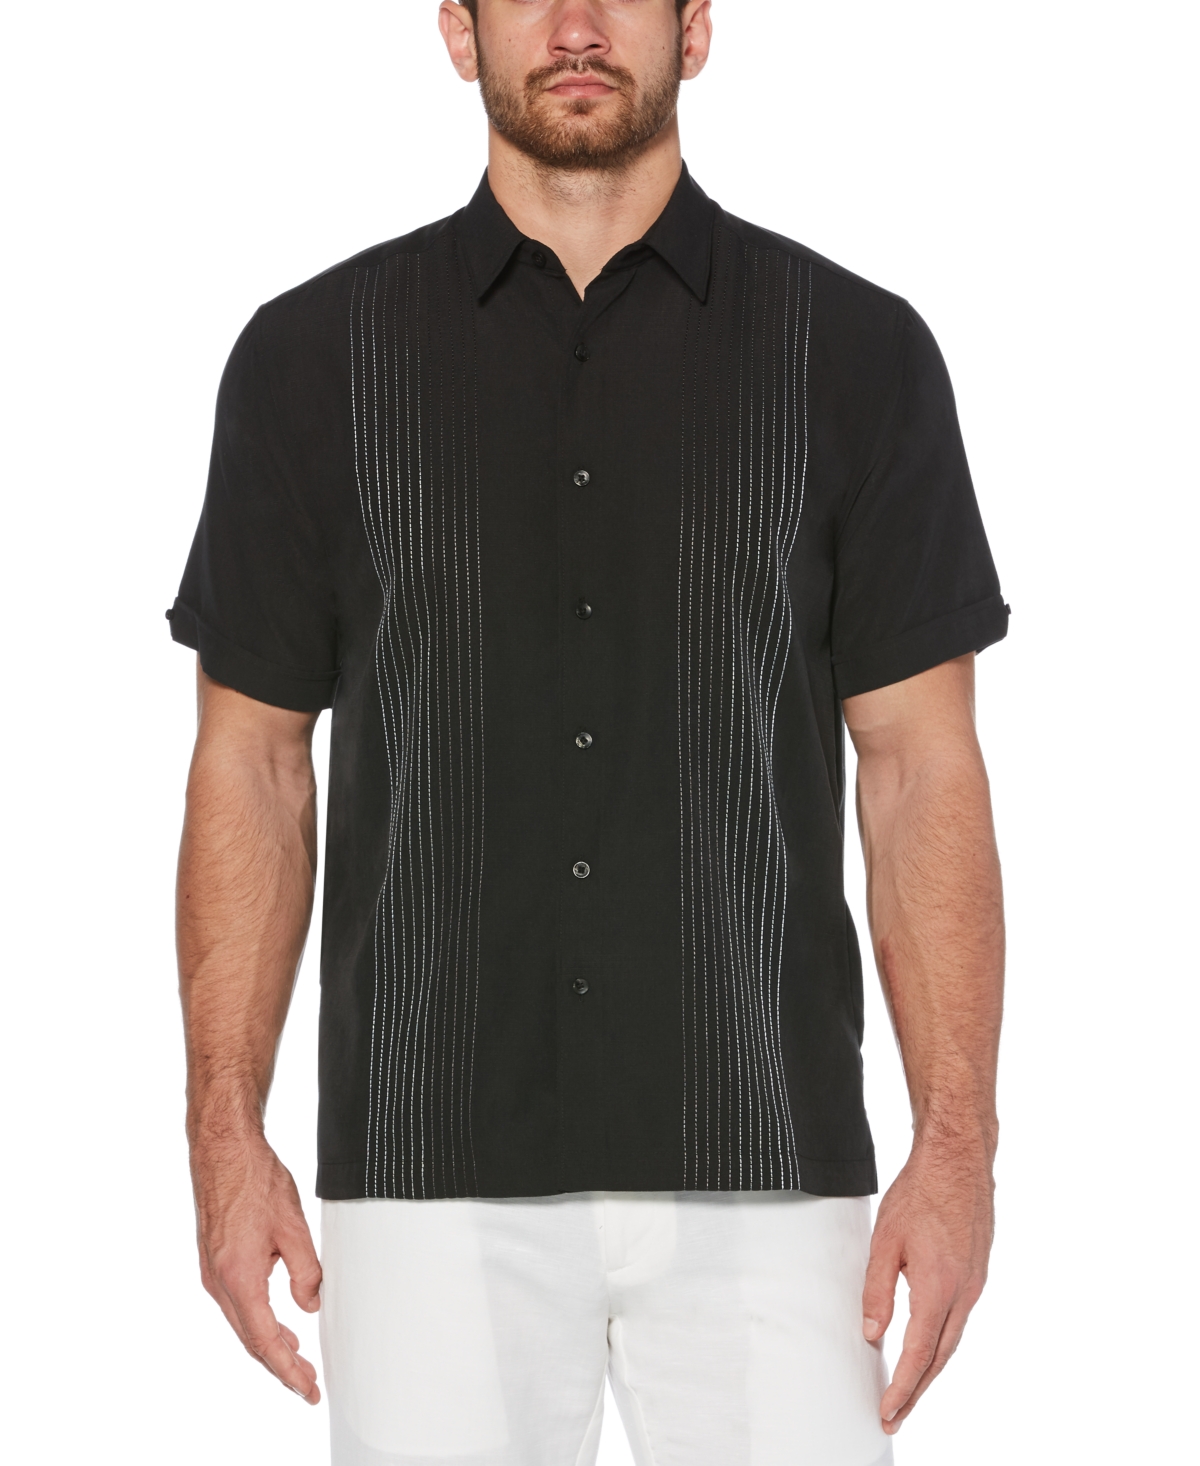 Men's Big & Tall Ombre Embroidered Stripe Short Sleeve Shirt - Jet Black